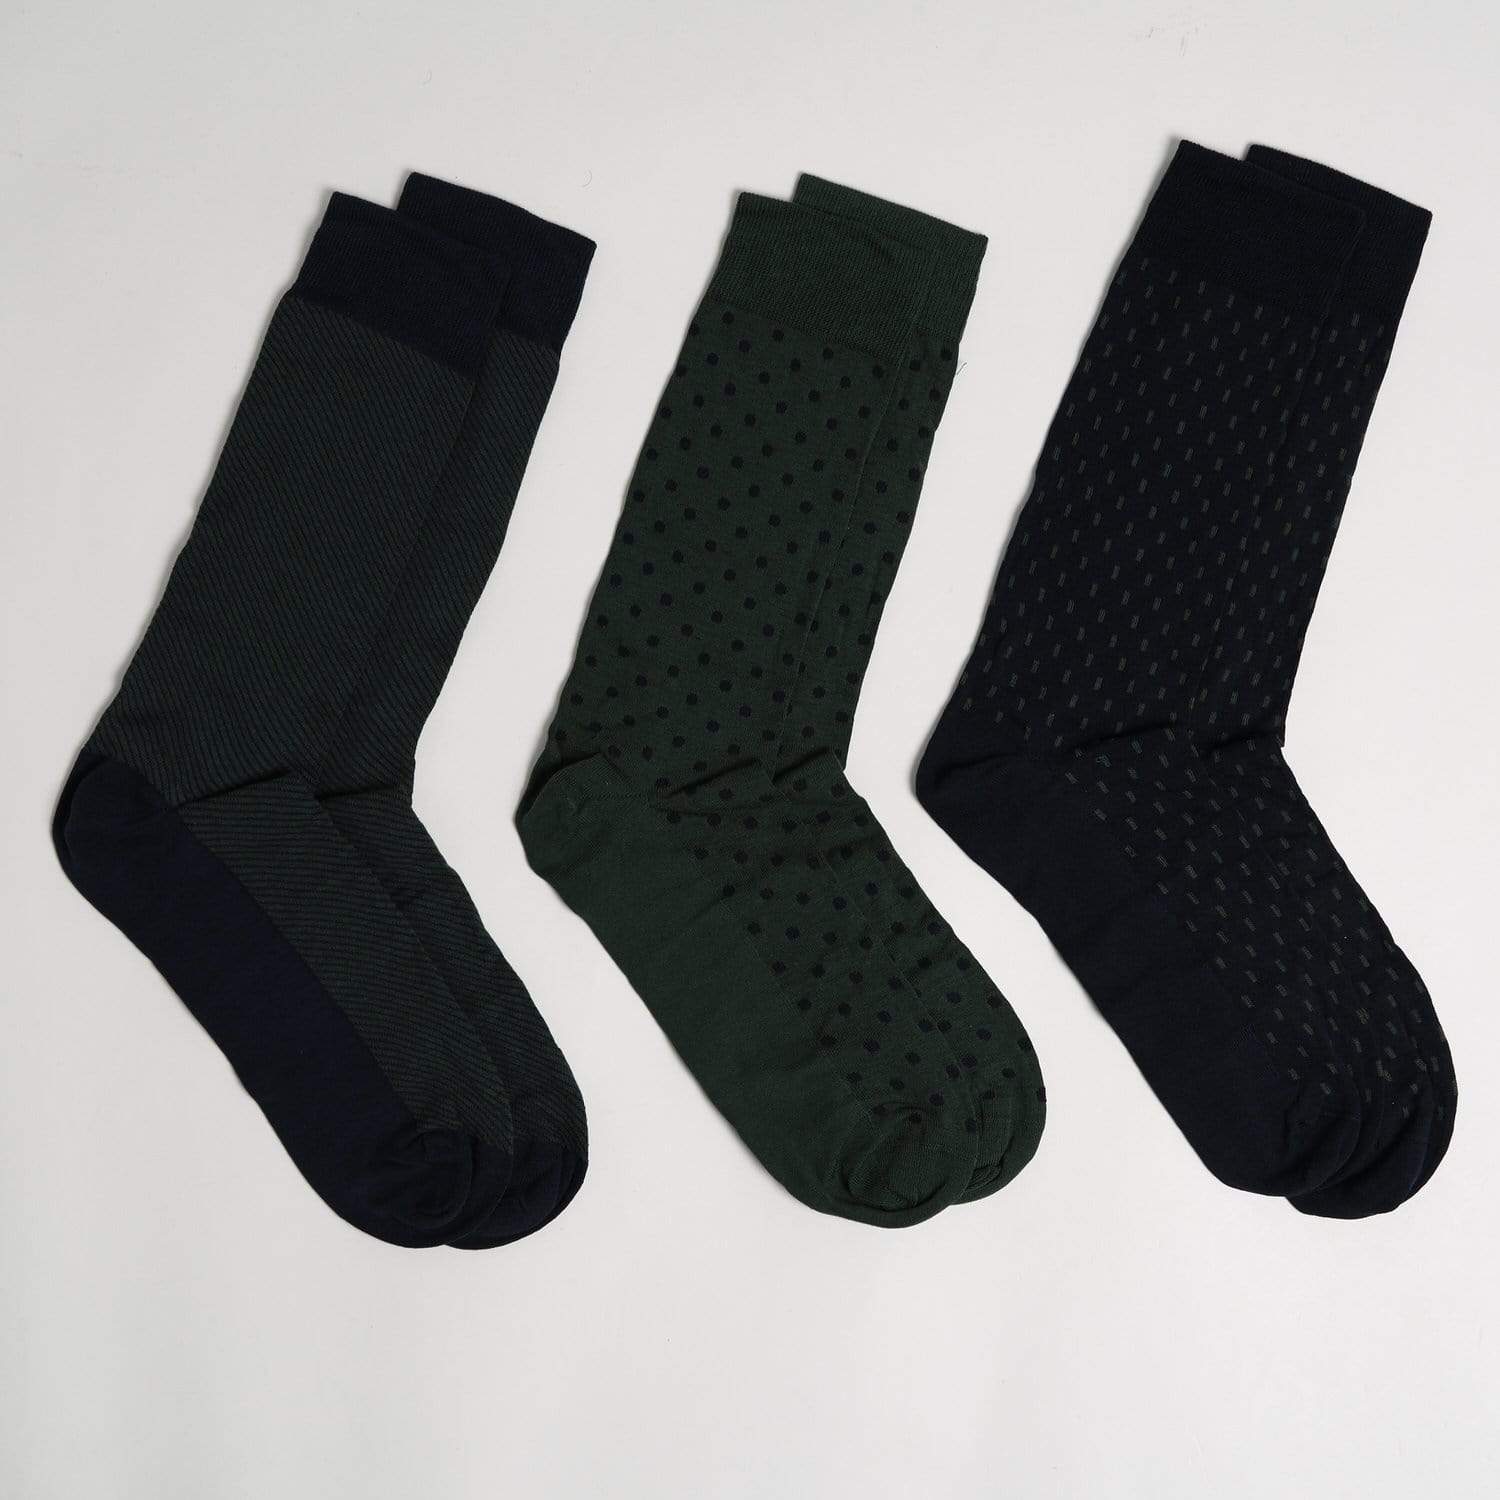 T.M.Lewin-Box-Socks-Navya-and-Green-61454-009